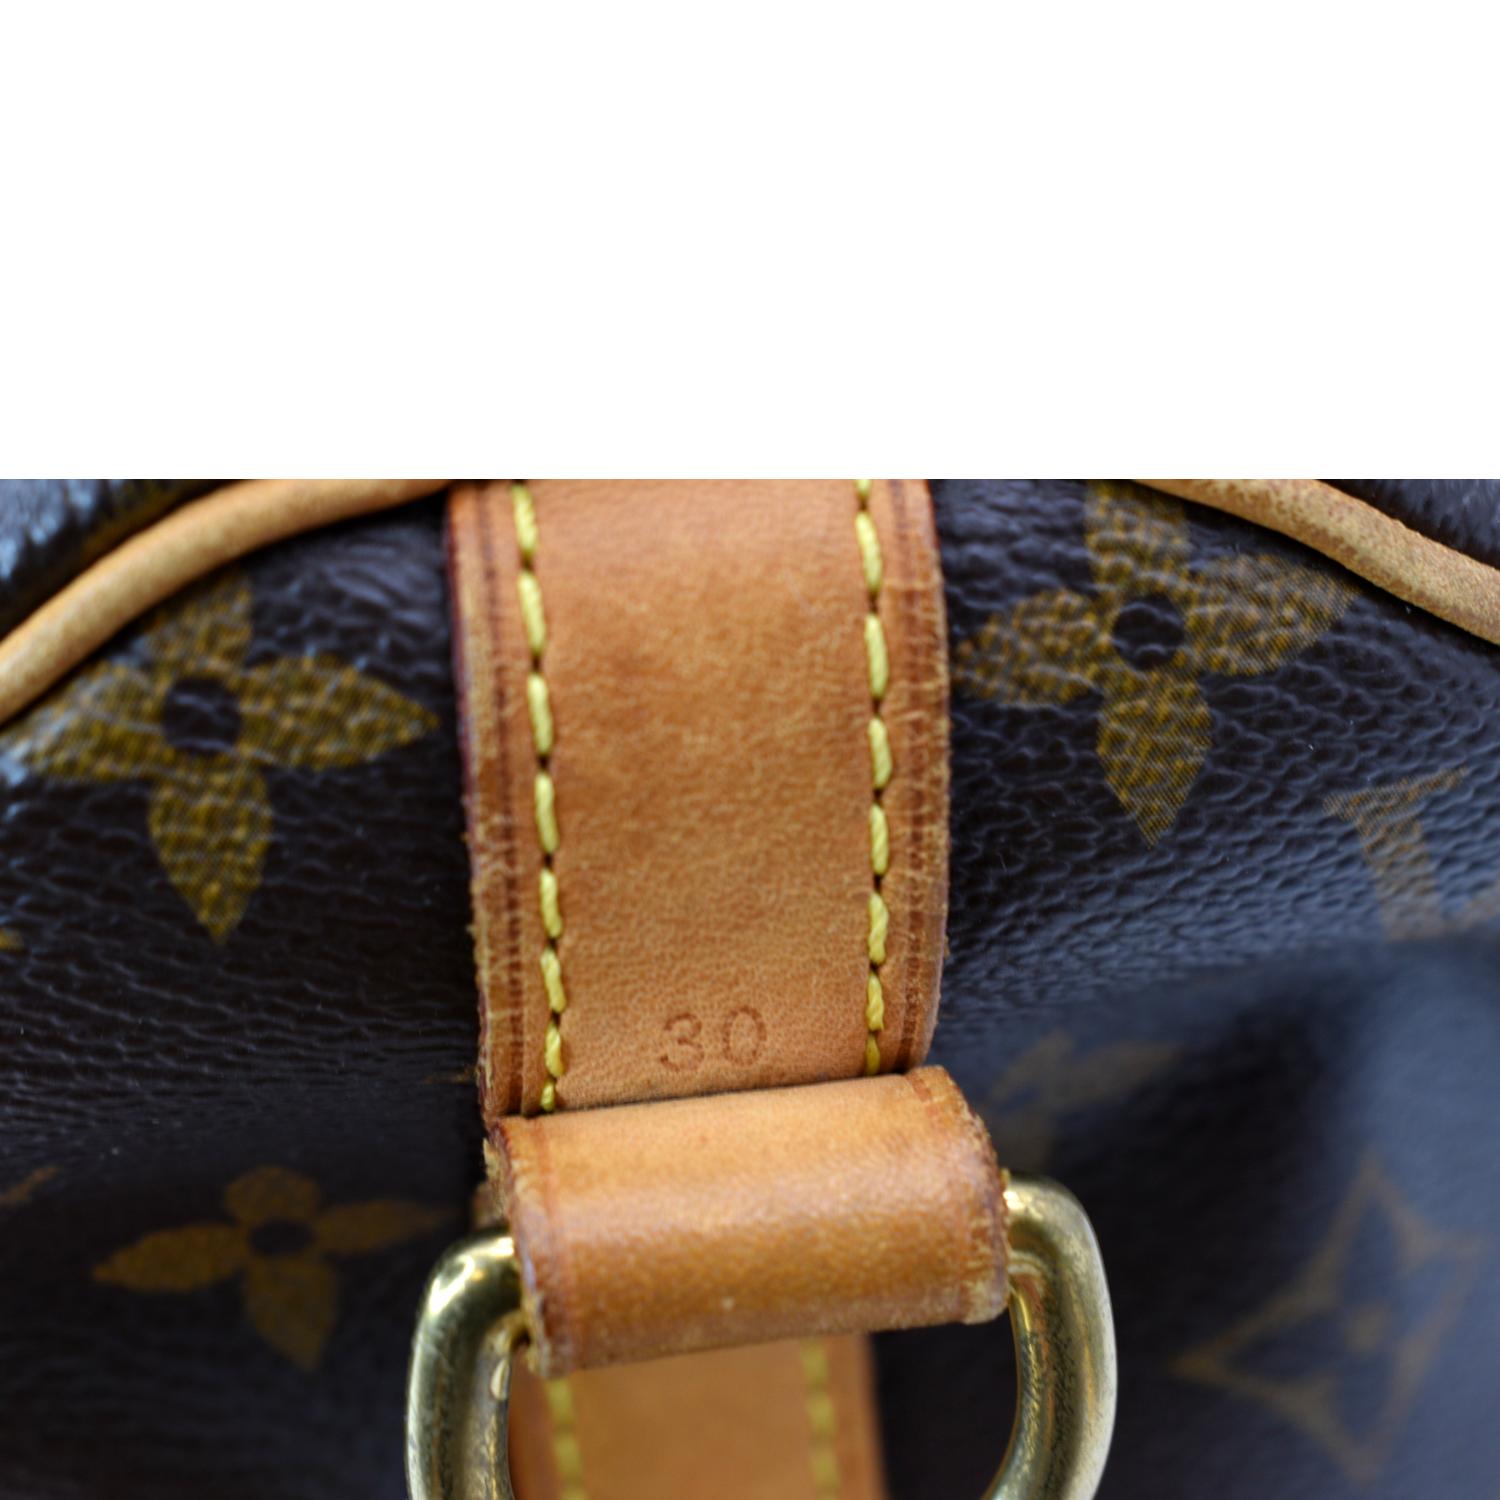 Speedy bandoulière handbag Louis Vuitton Brown in Fur - 29511537